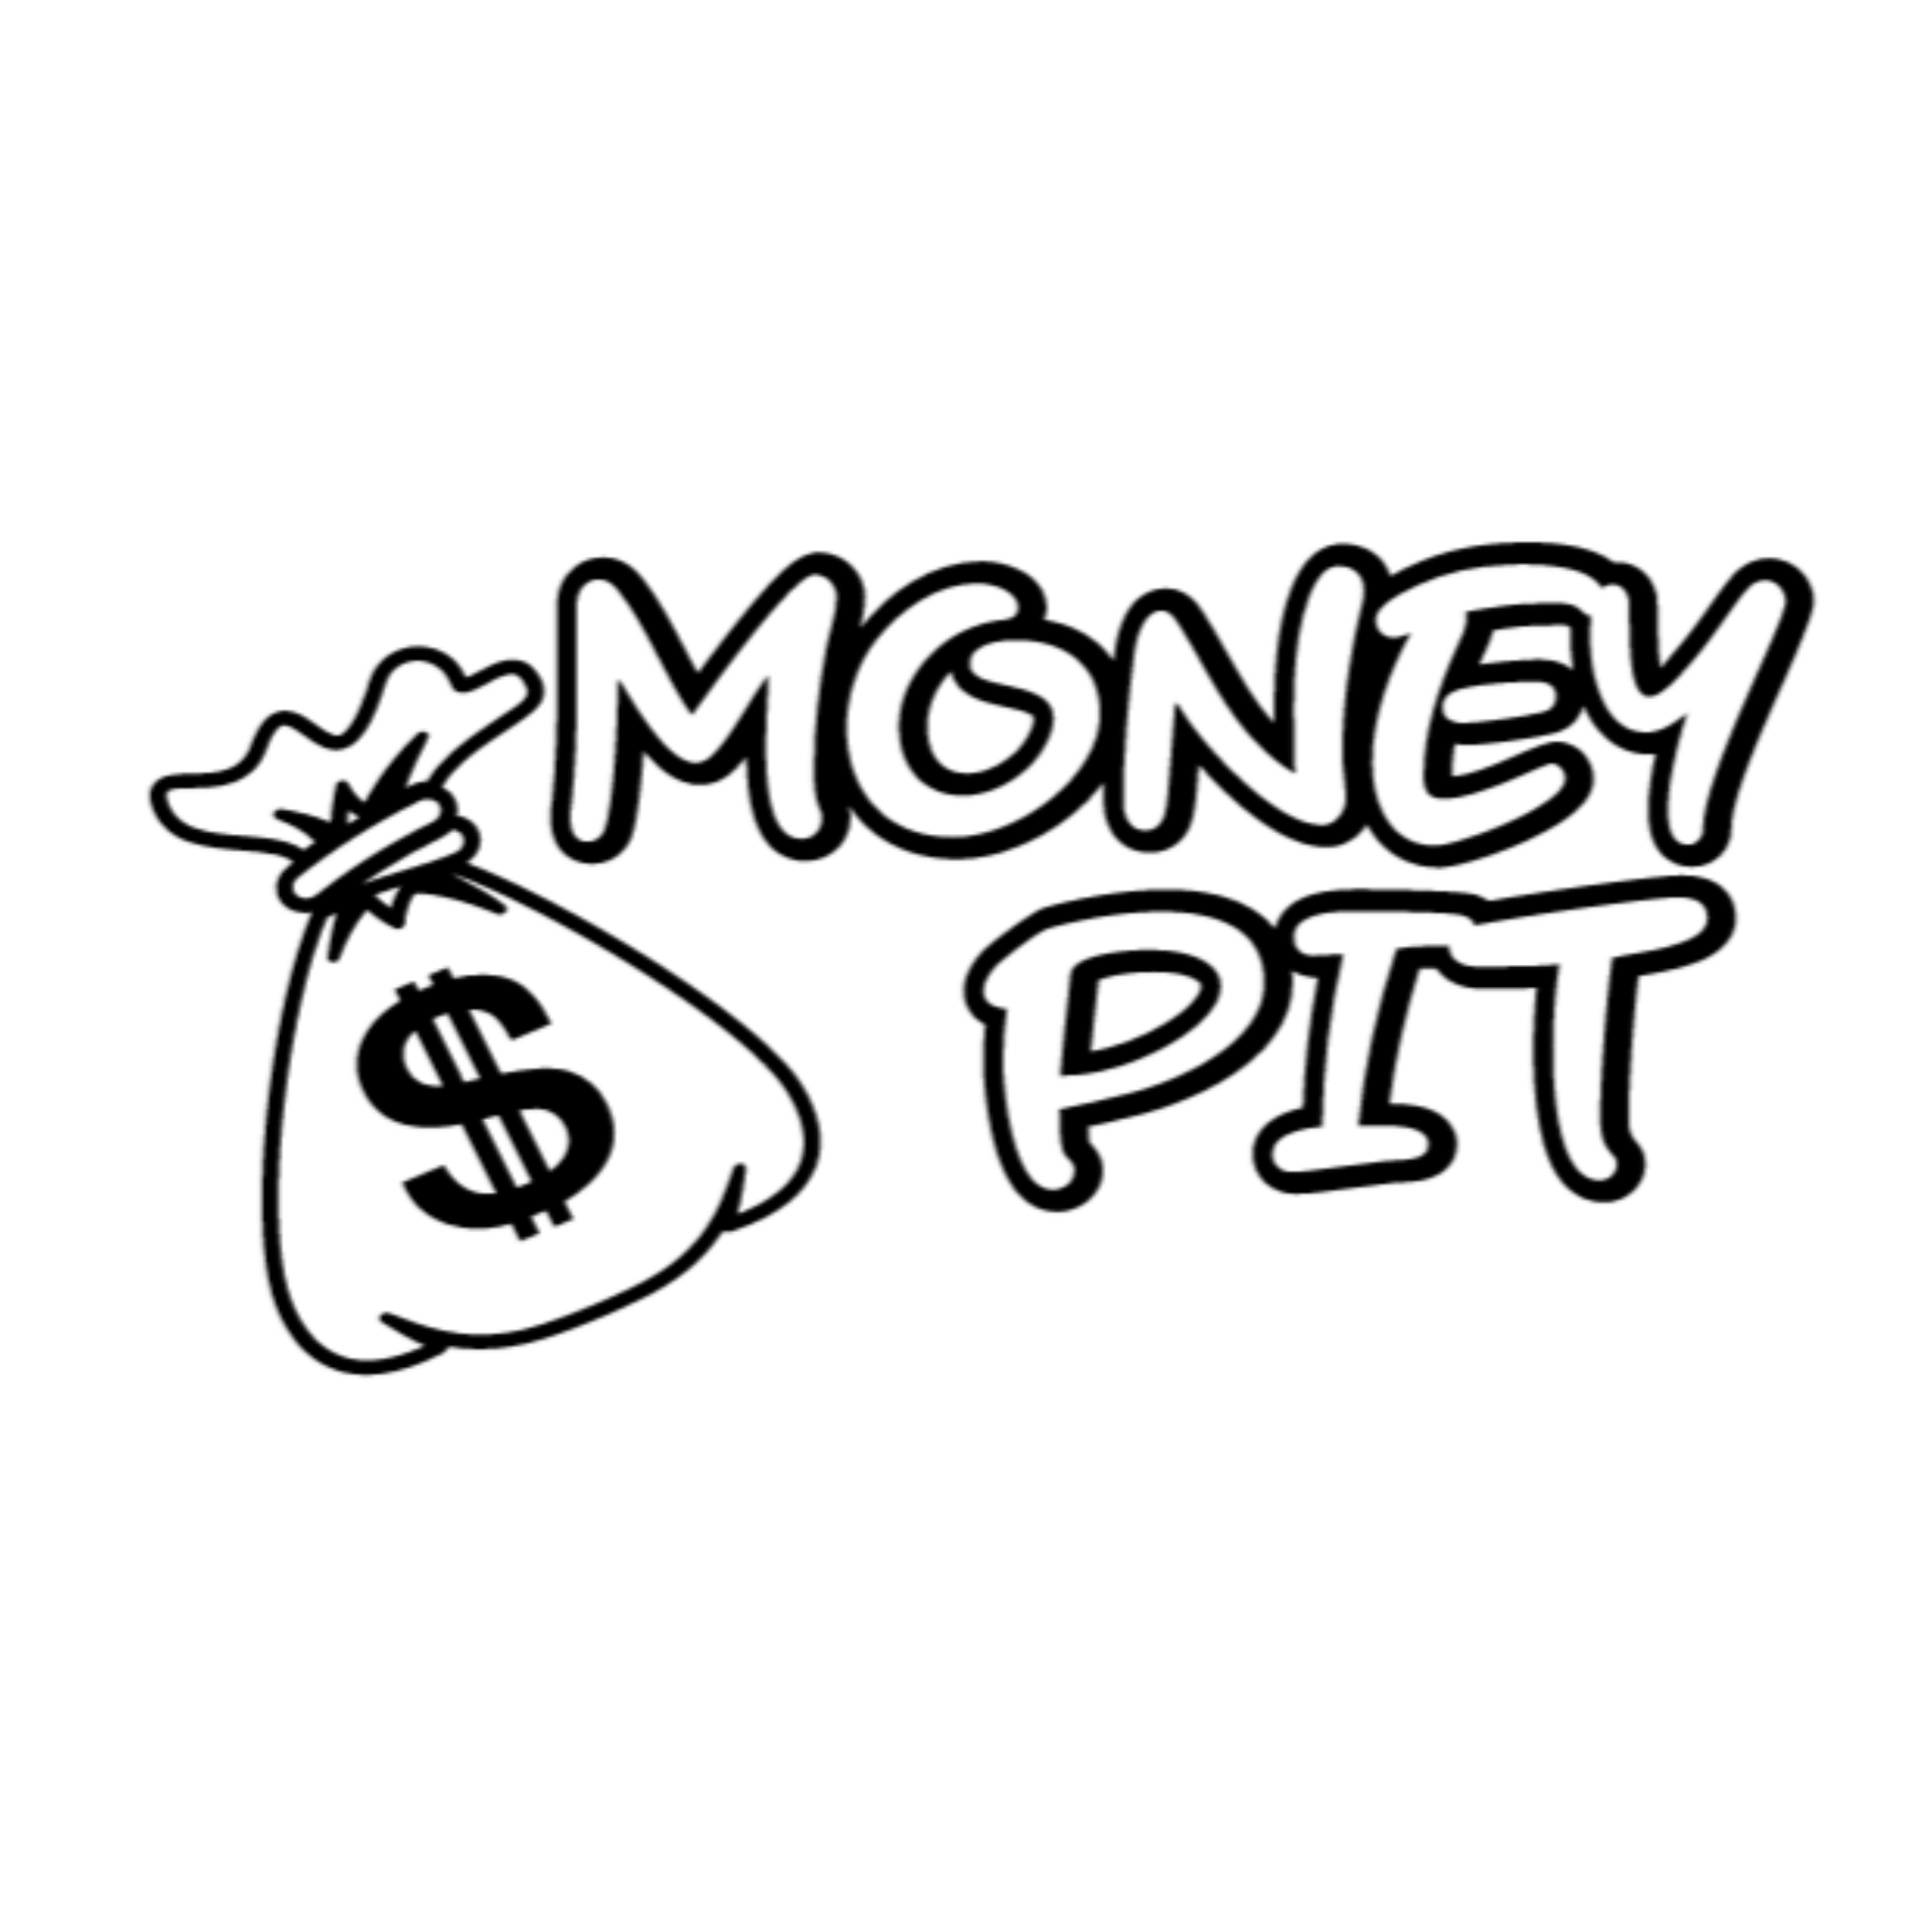 Money Pit